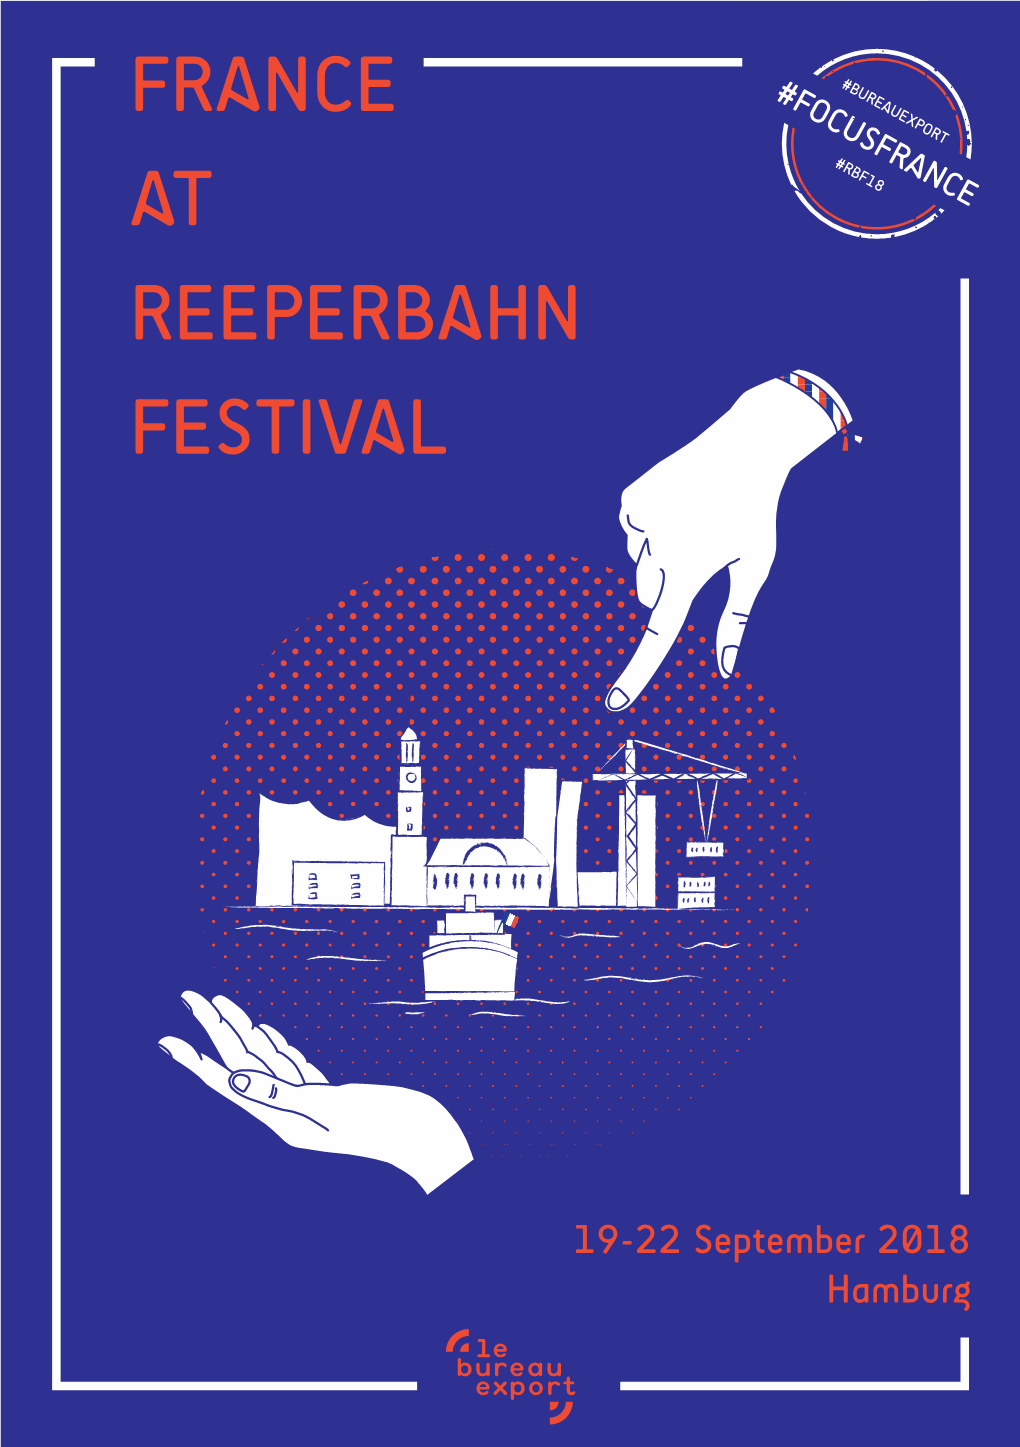 FRANCE at Reeperbahn Festival